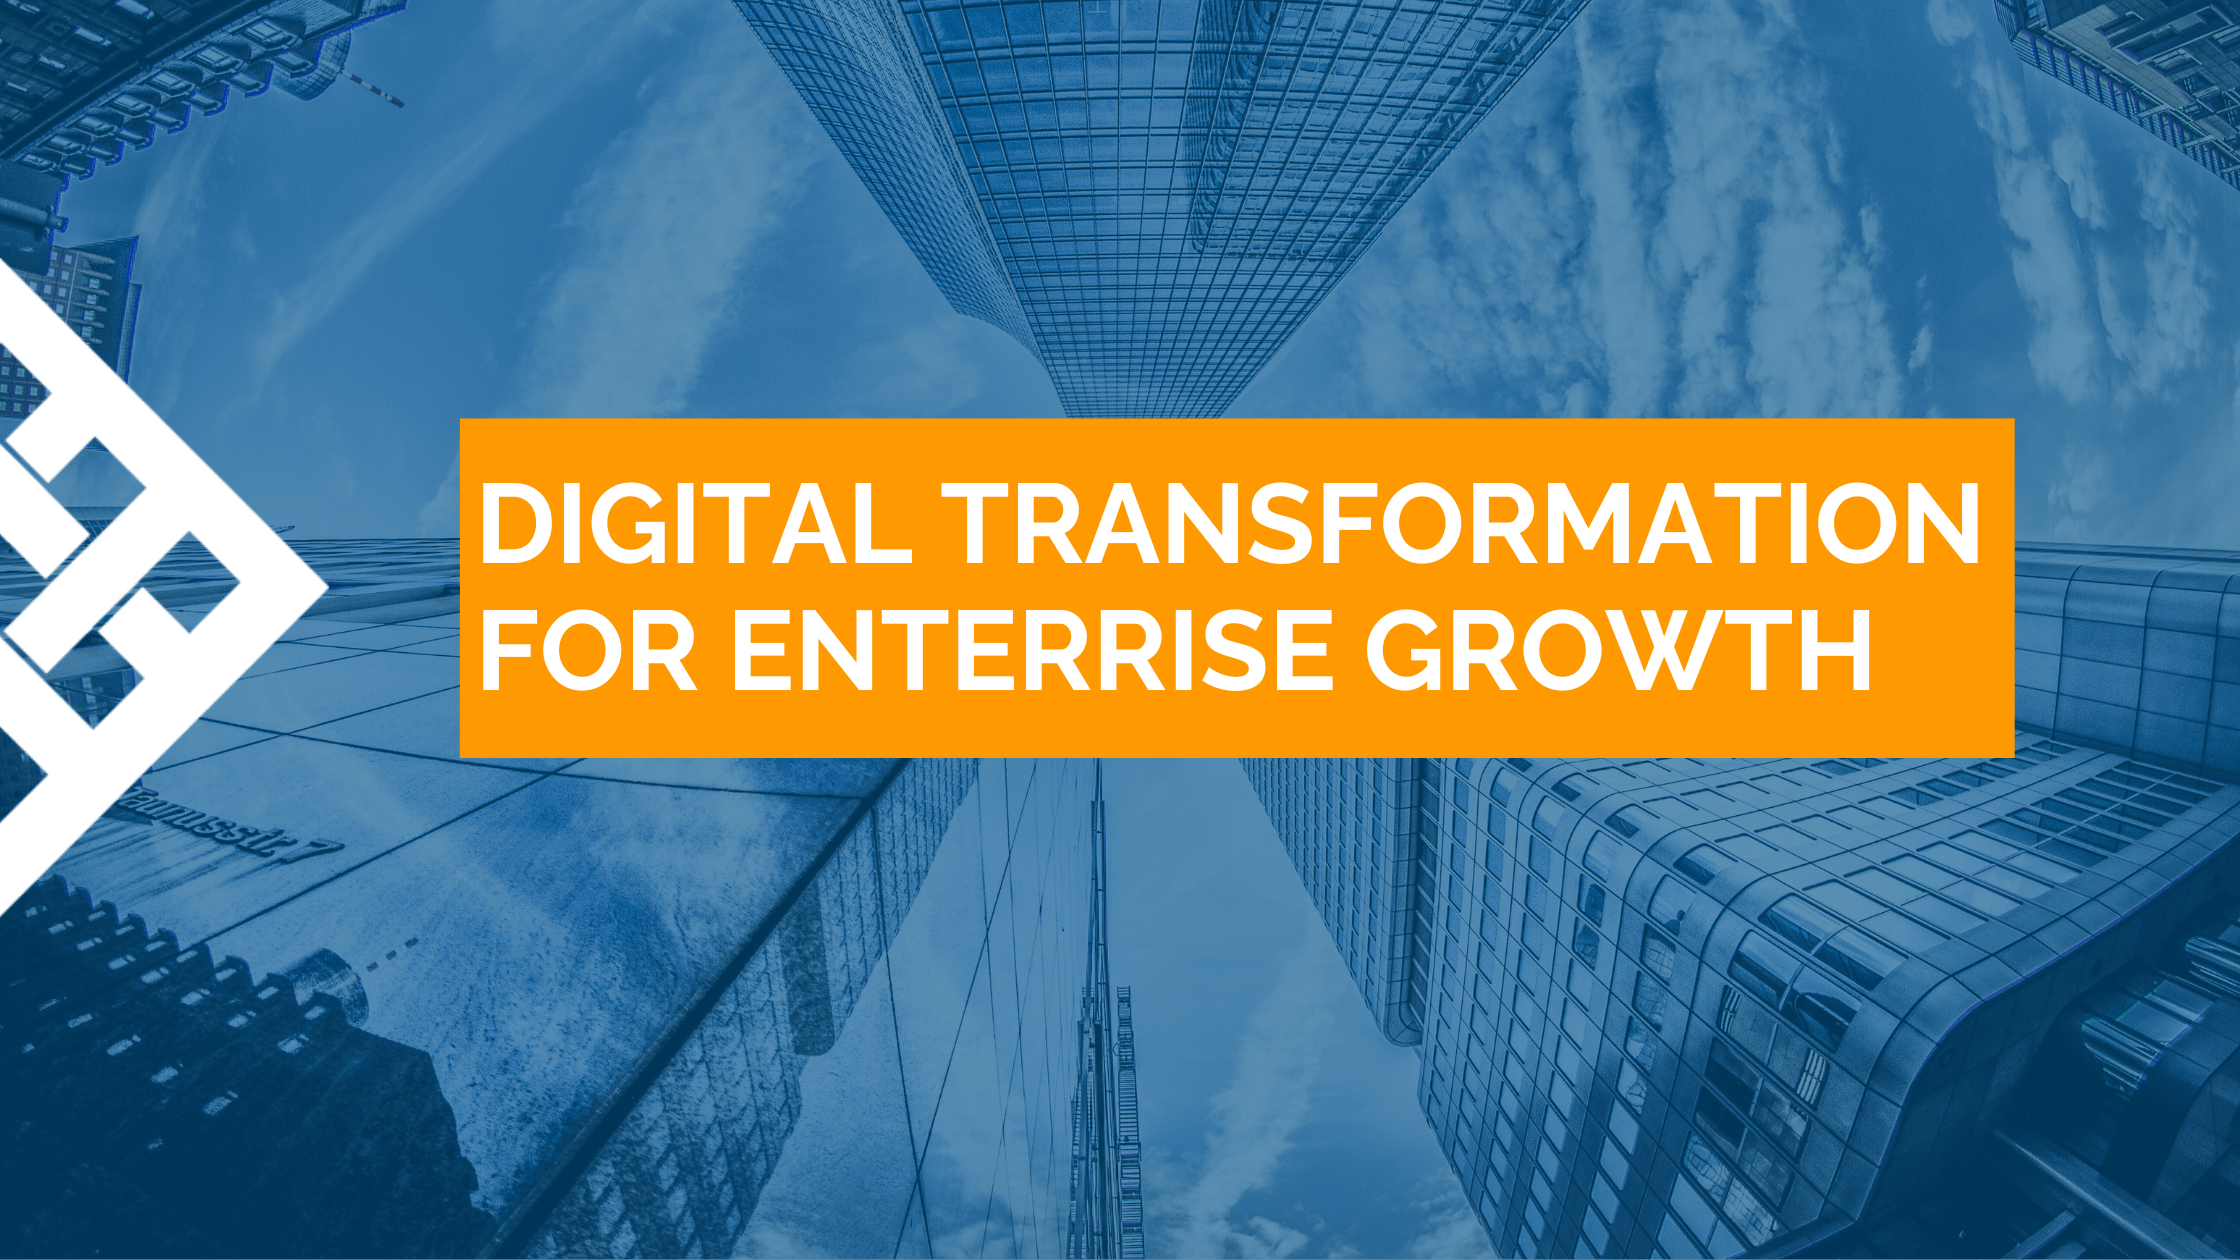 Enterprise Digital Transformation For Growth - Blog Graphic